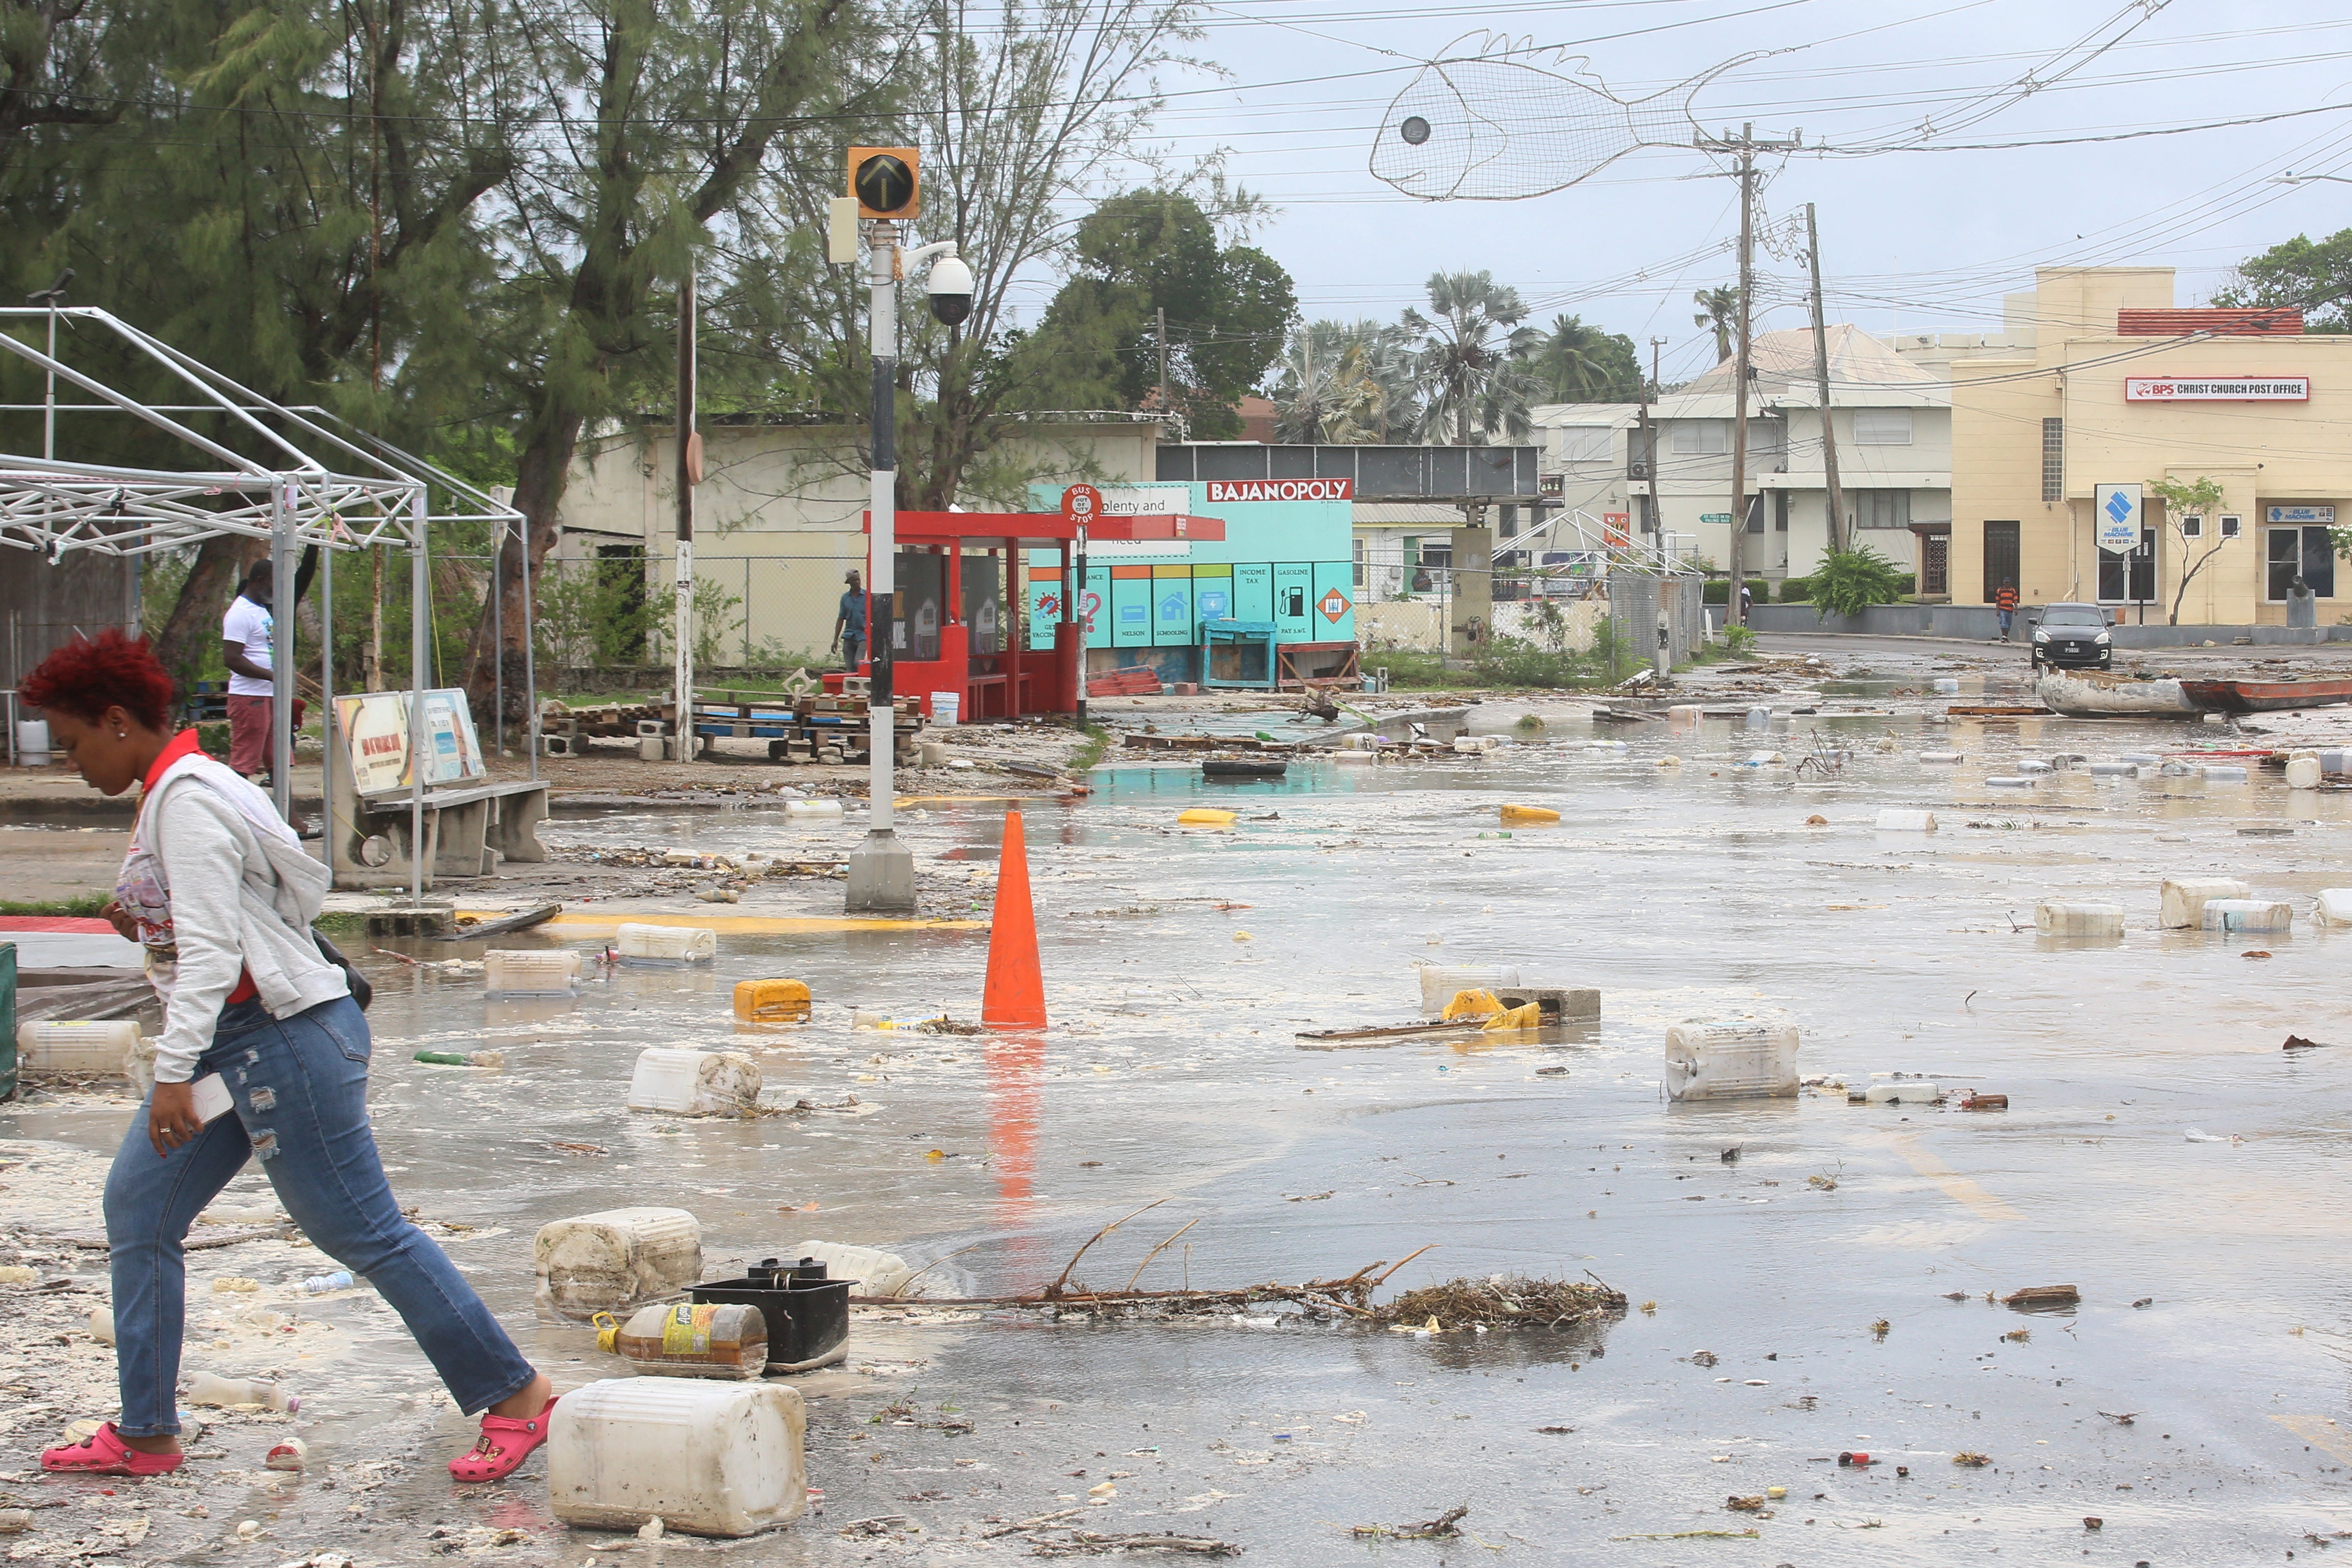 A woman walks through a debris-filled street in Bridgetown, Barbados after Hurricane Beryl blew through the island